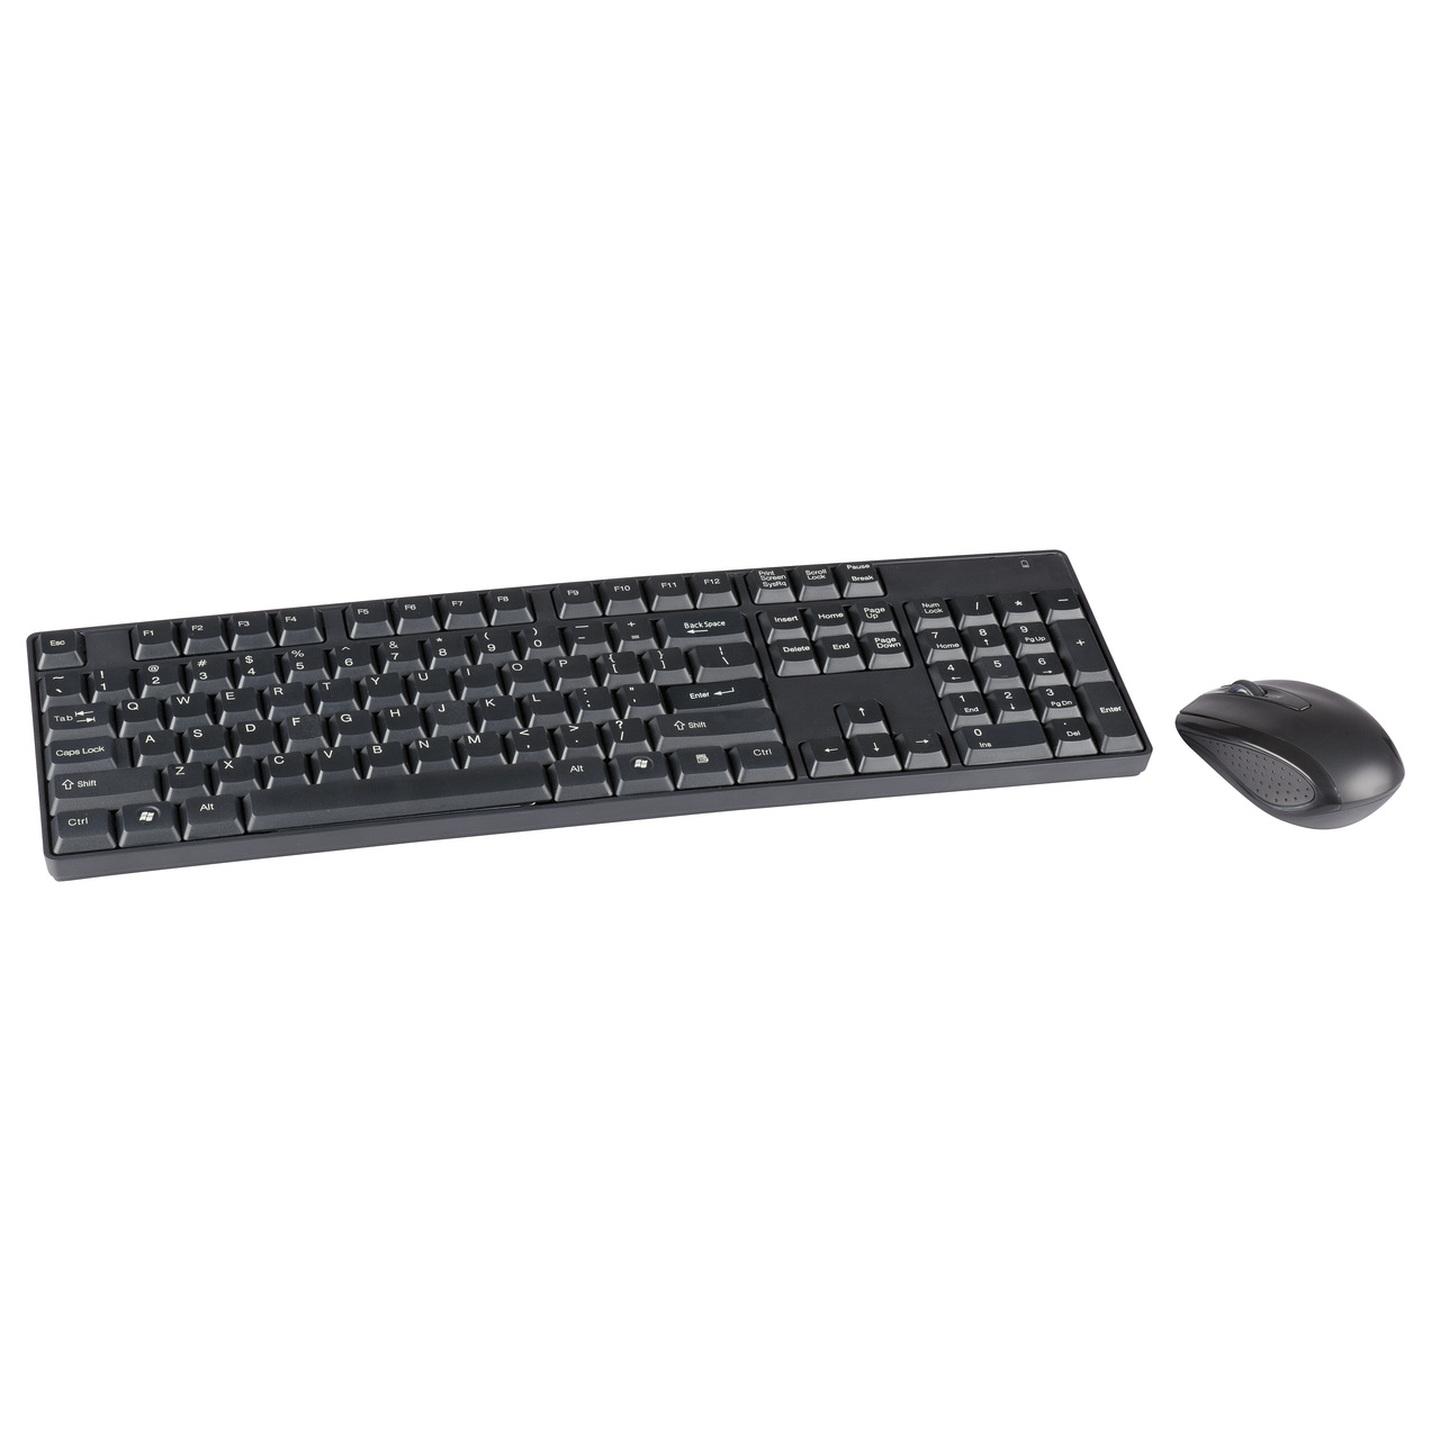 2.4GHz Wireless Keyboard & Mouse